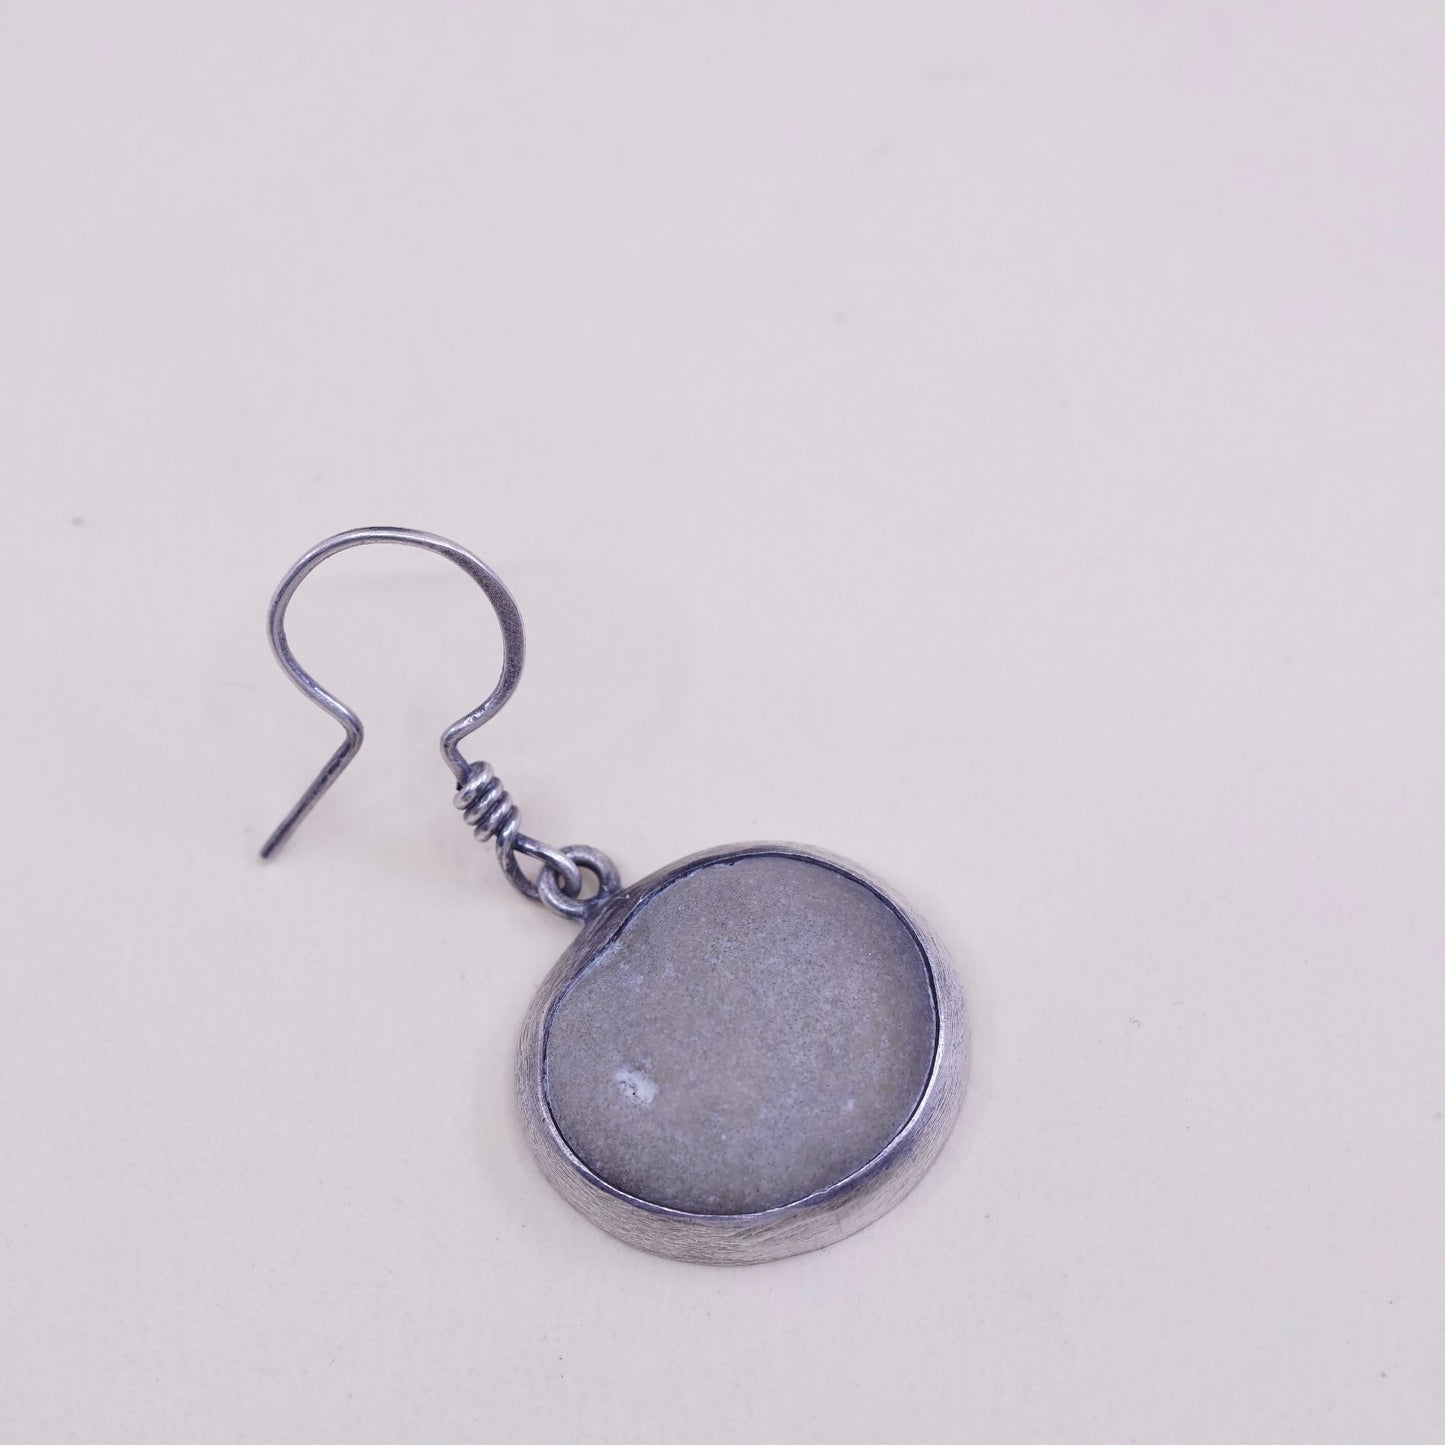 Vintage Haley sterling 925 silver handmade earrings with pebble stone Dangles